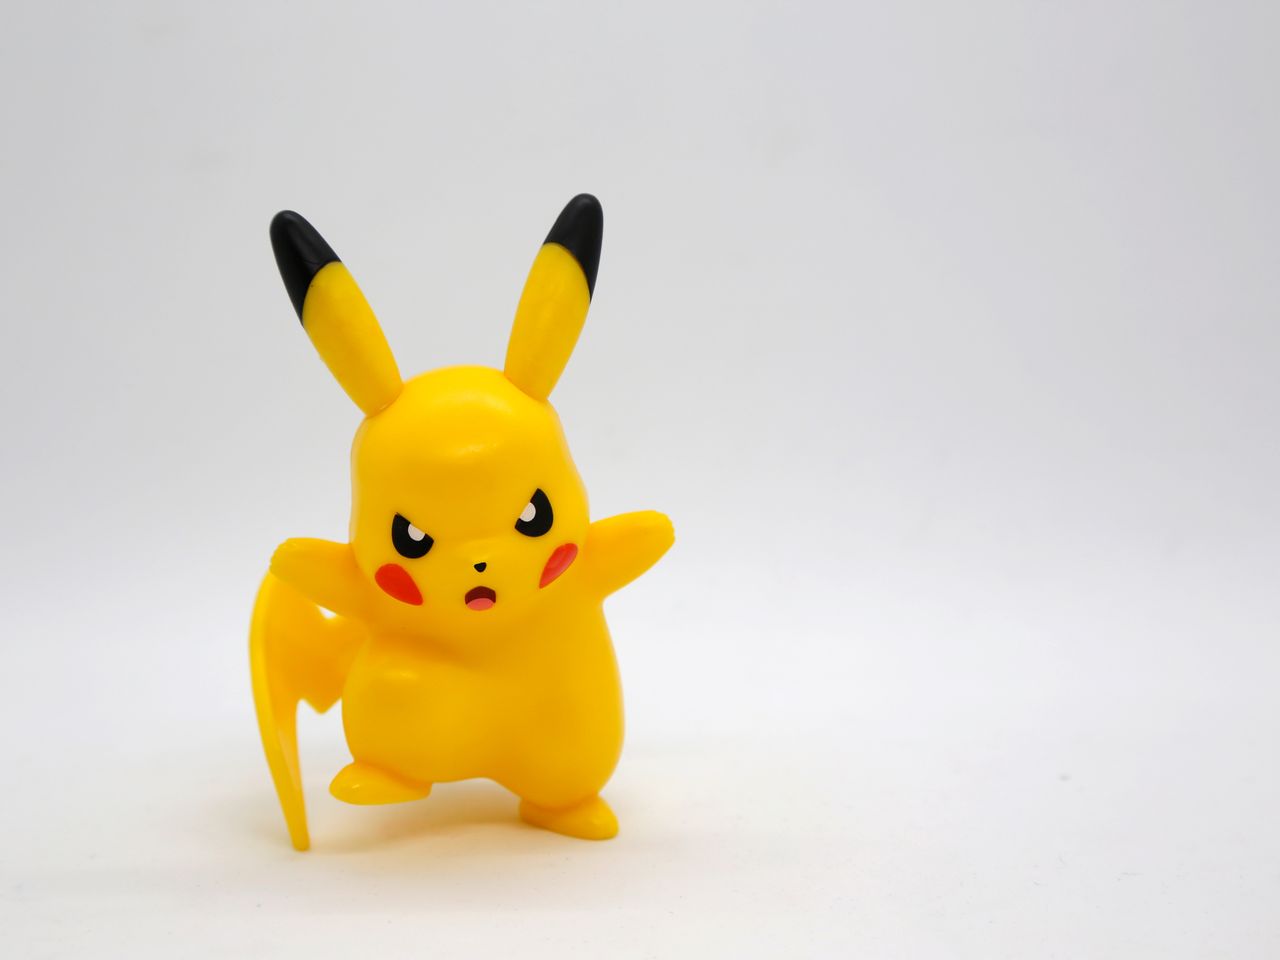 Pokémon Pikachu